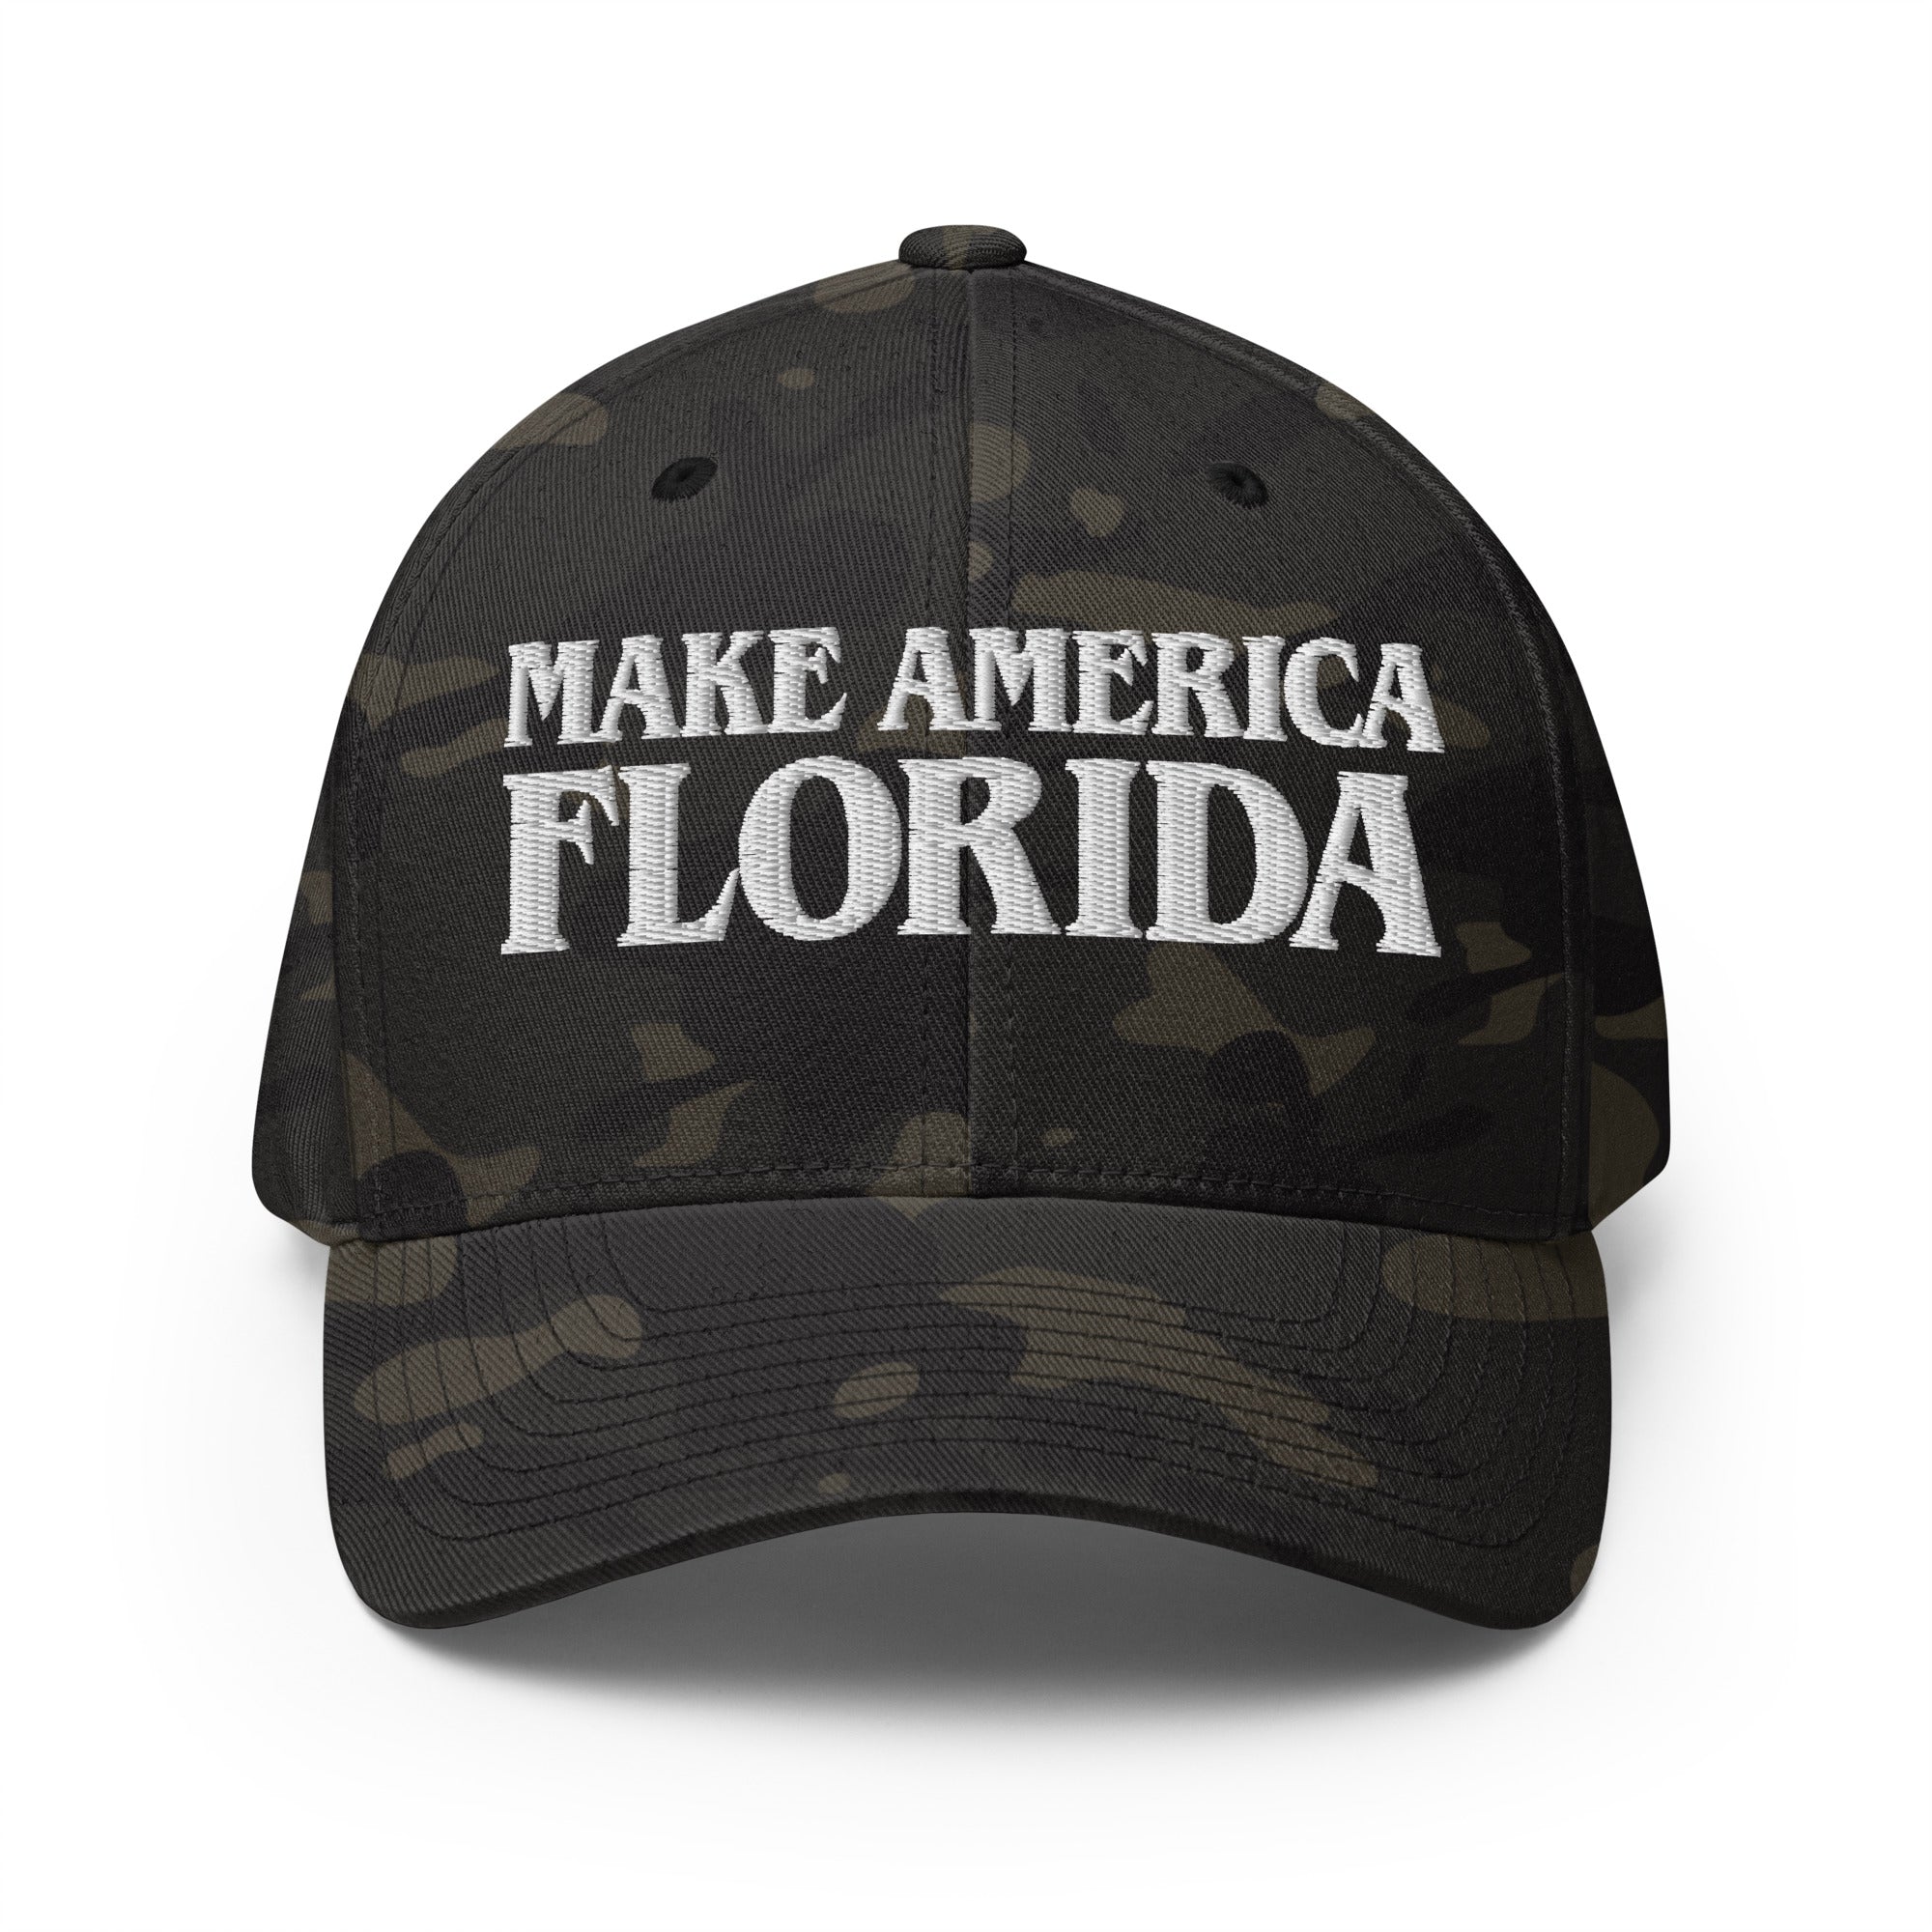 Make America Florida Flexfit Twill Cap